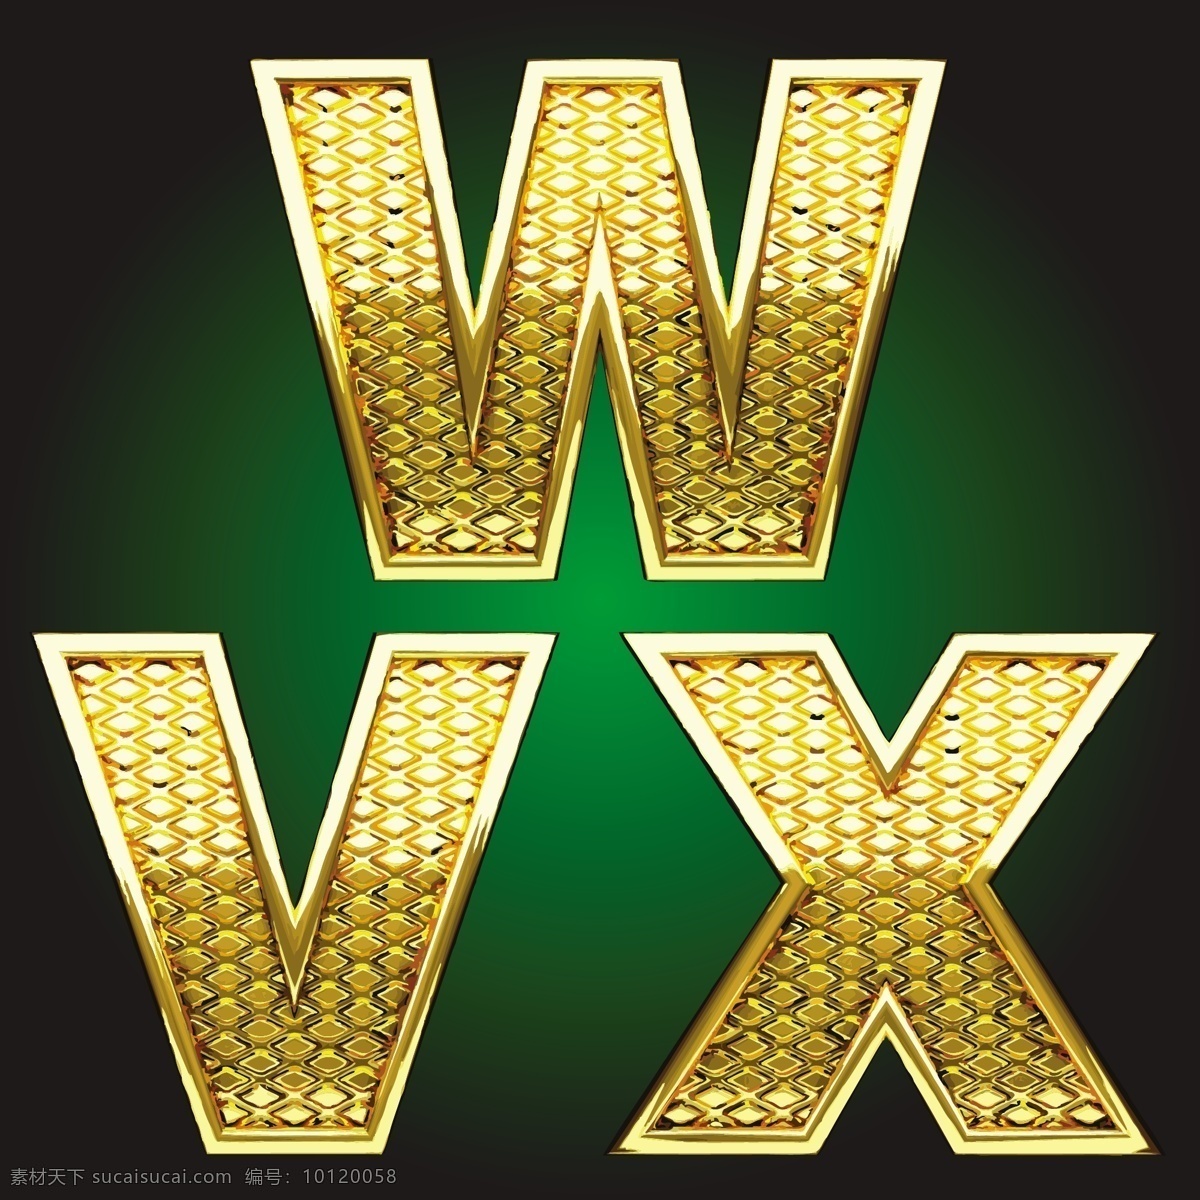 wvx 金属 字母 wvx字母 金属字母 金色字母 创意字母 金属纹理 书画文字 文化艺术 矢量素材 黑色